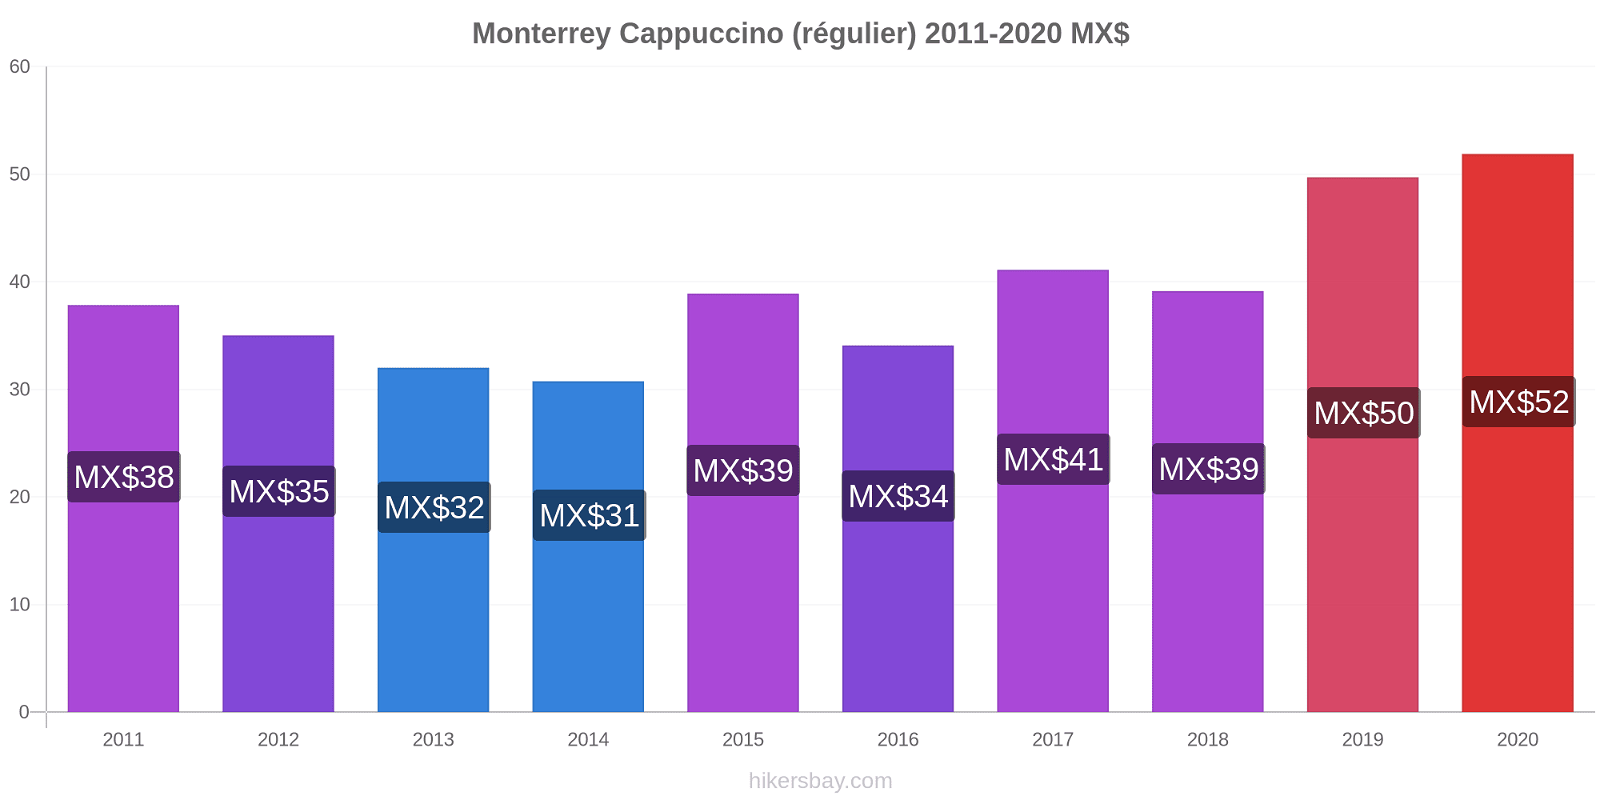 Monterrey changements de prix Cappuccino (régulier) hikersbay.com